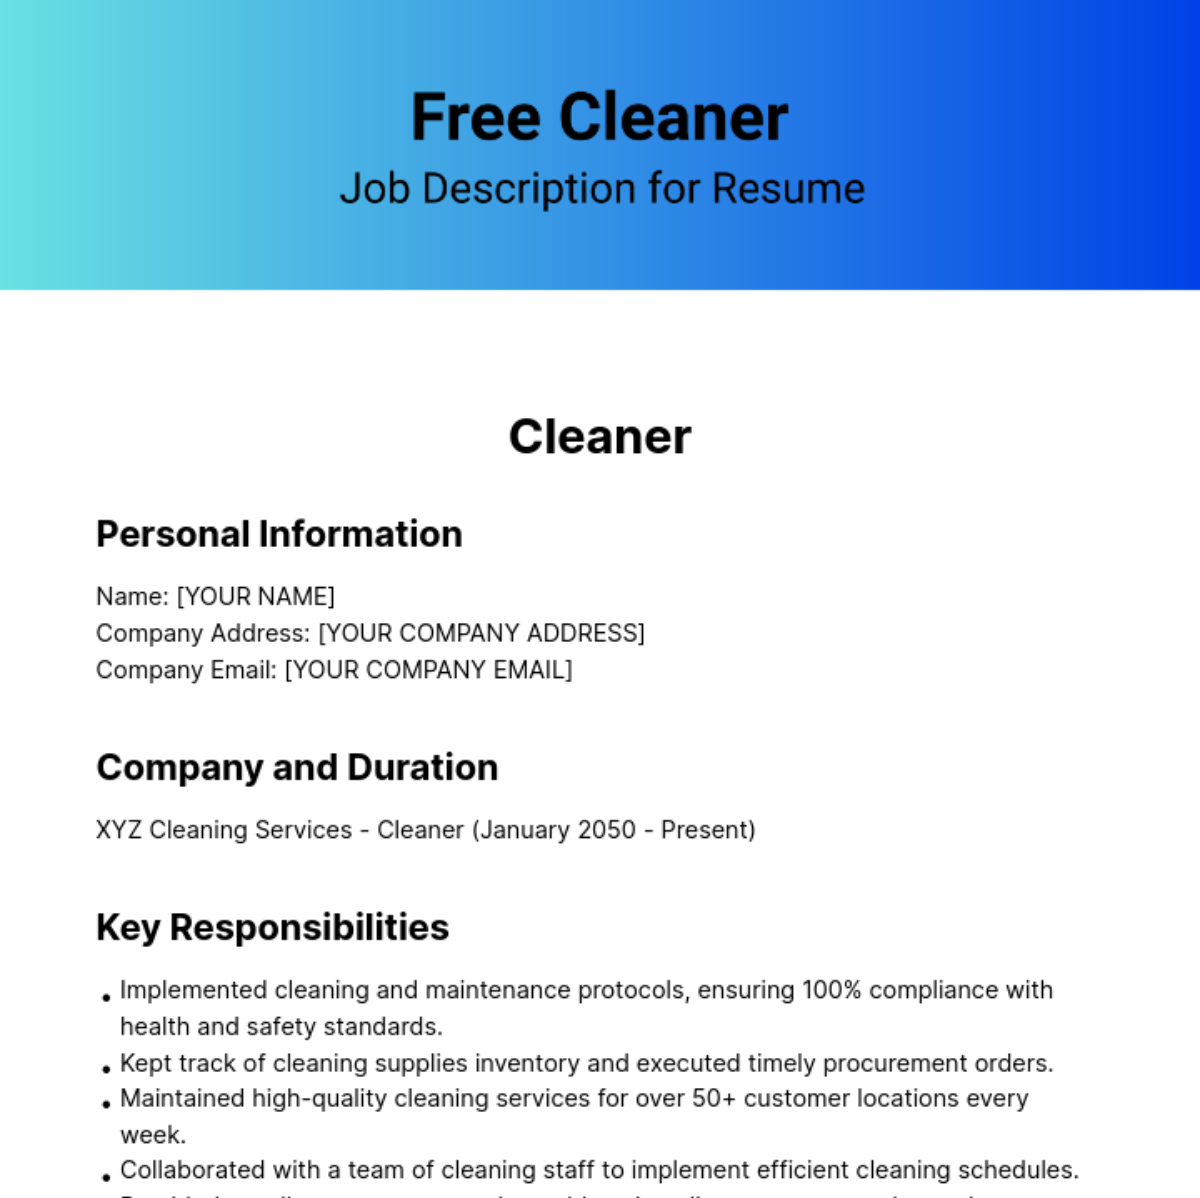 Free Cleaner Job Description for Resume Template